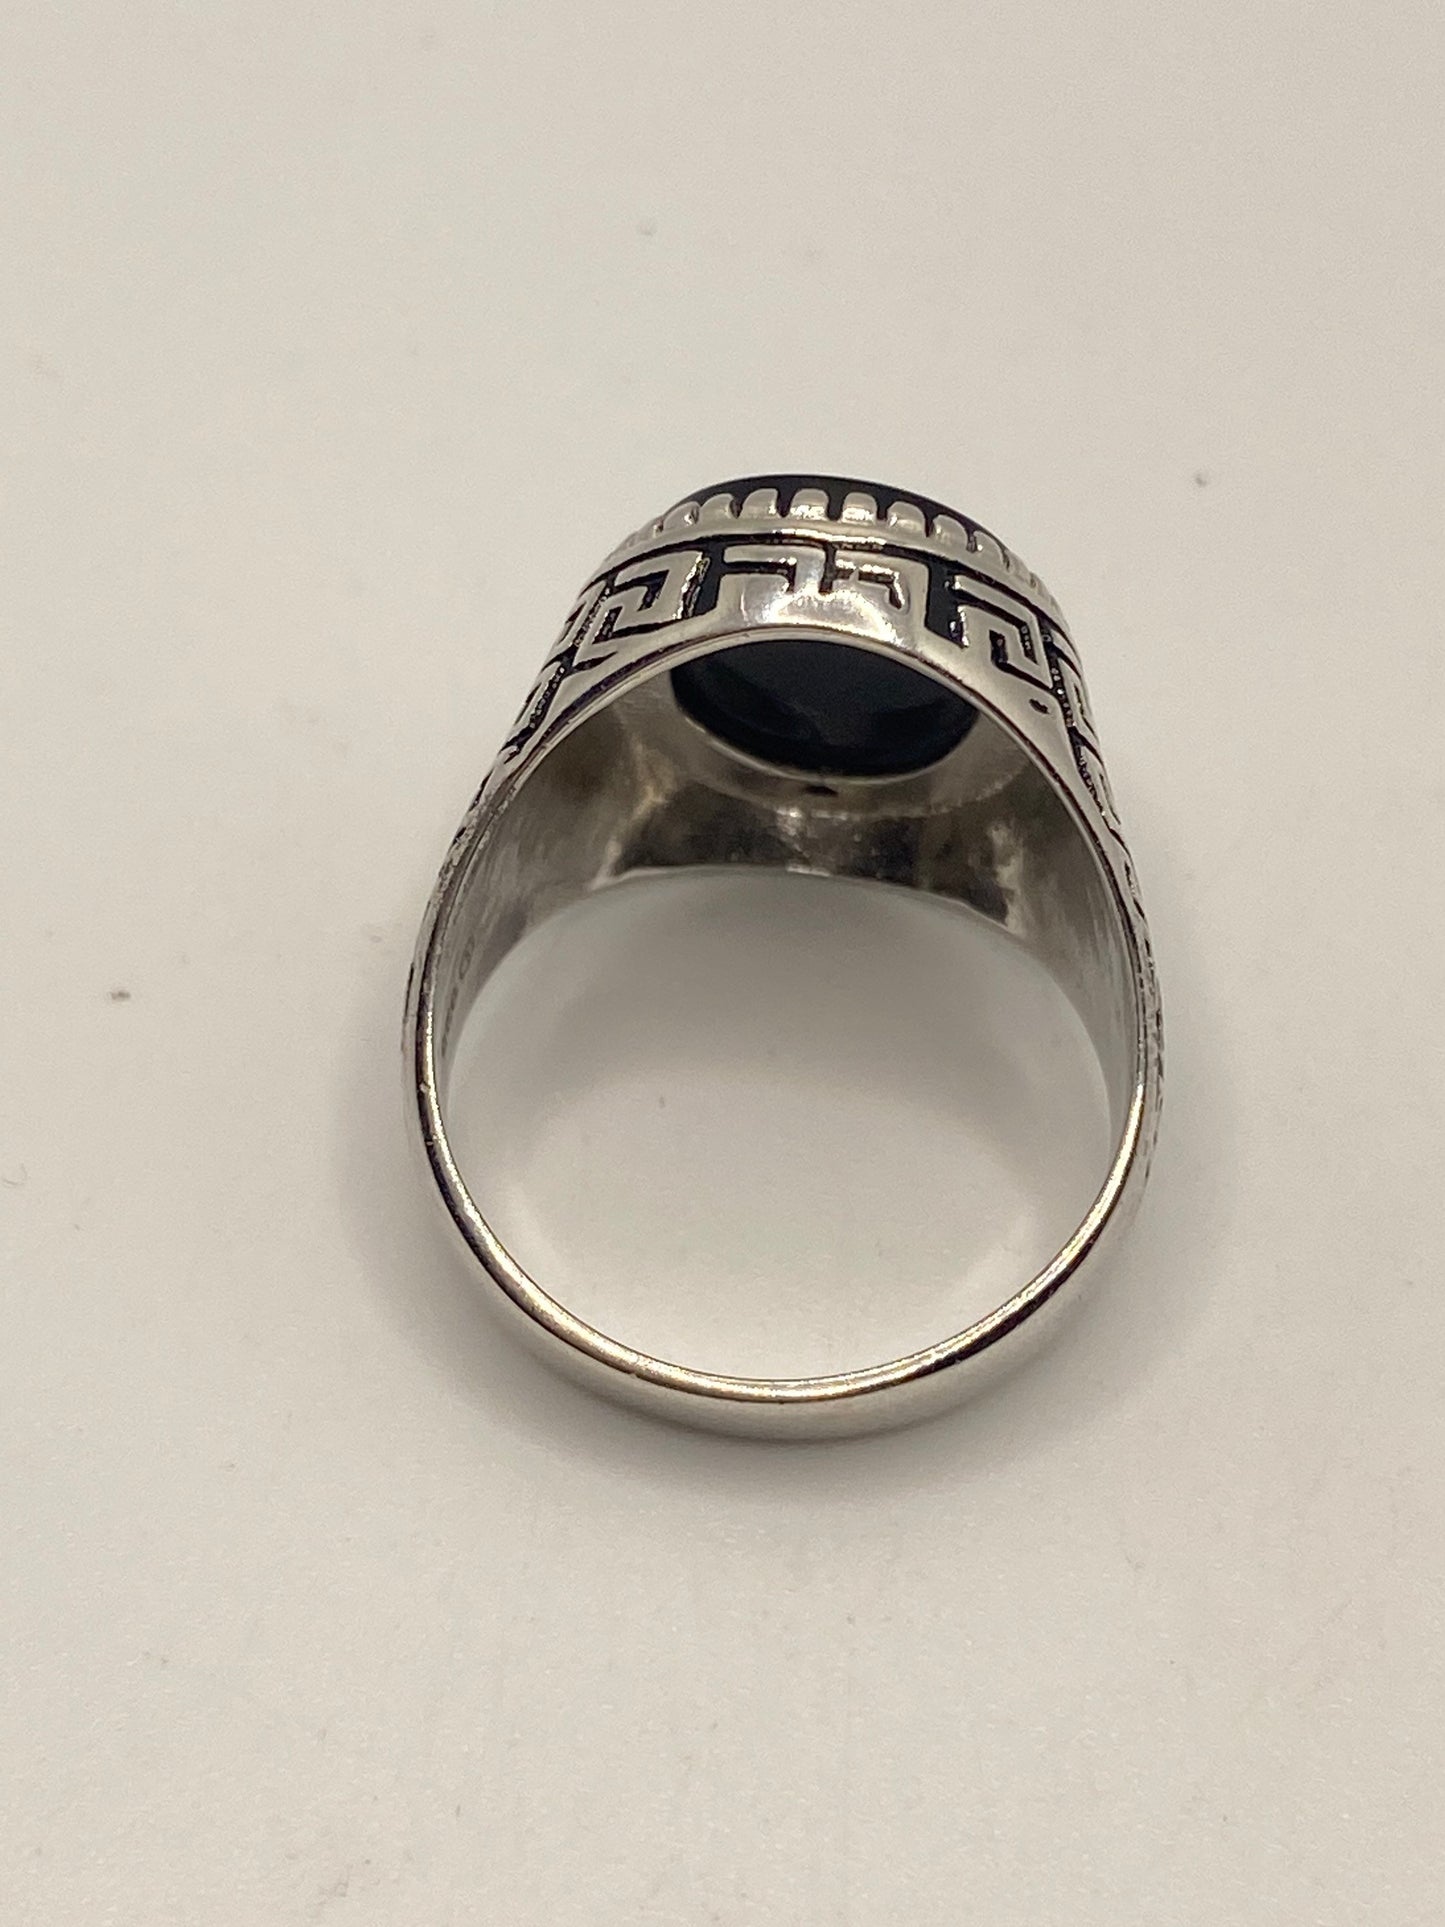 Vintage Black Onyx Mens Ring in 925 Sterling Silver